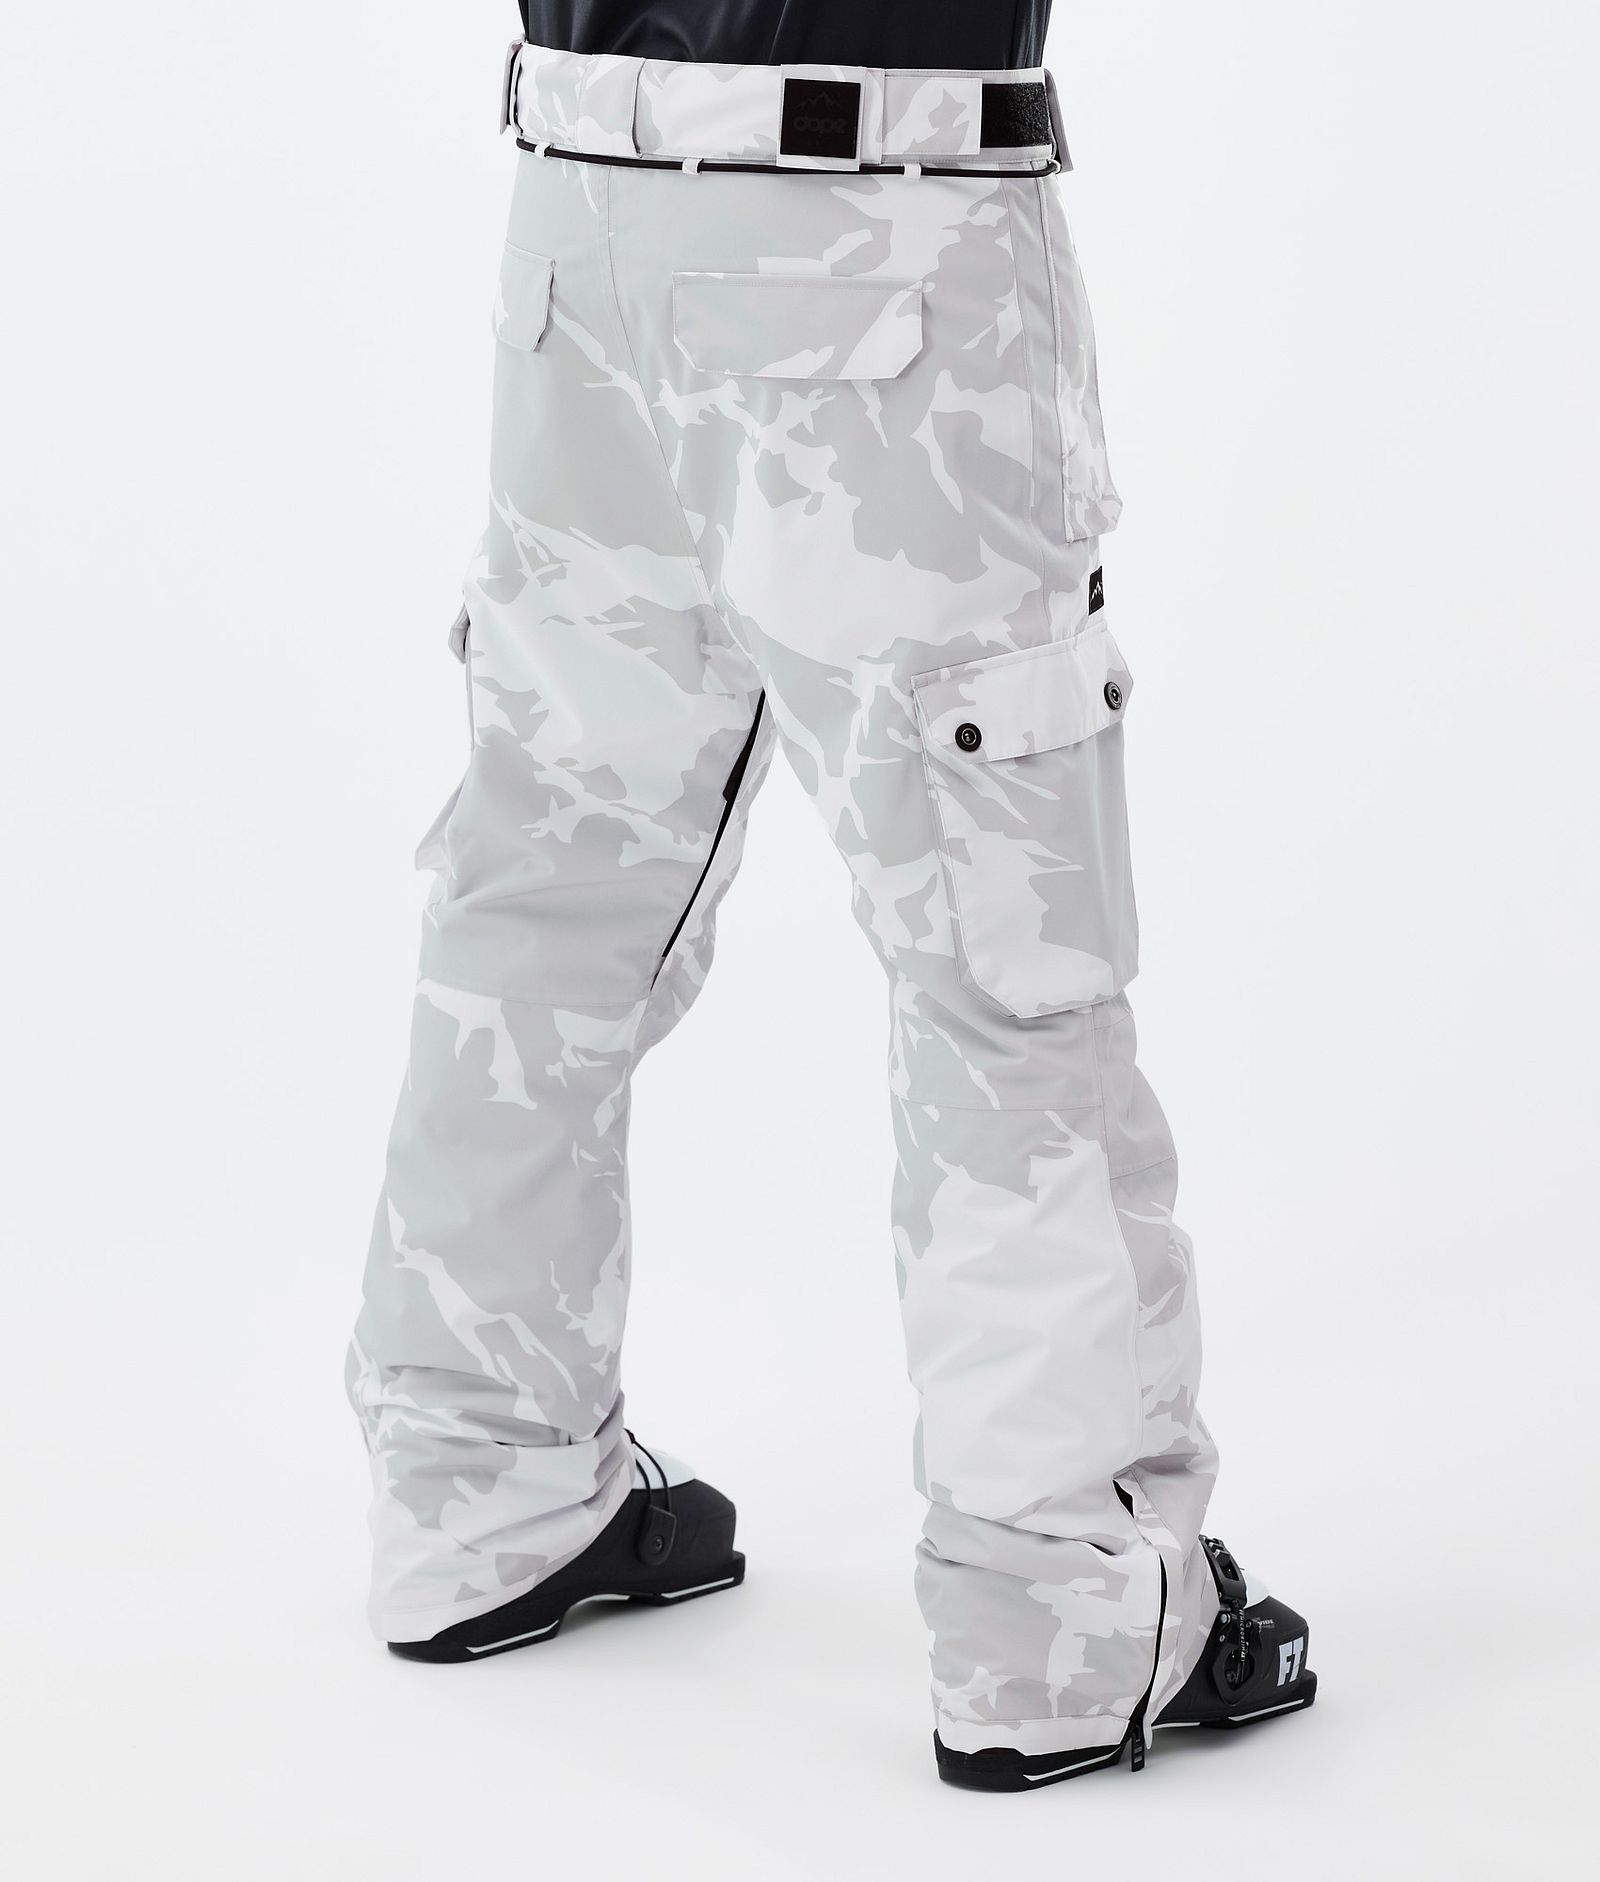 Iconic Pantalon de Ski Homme Grey Camo